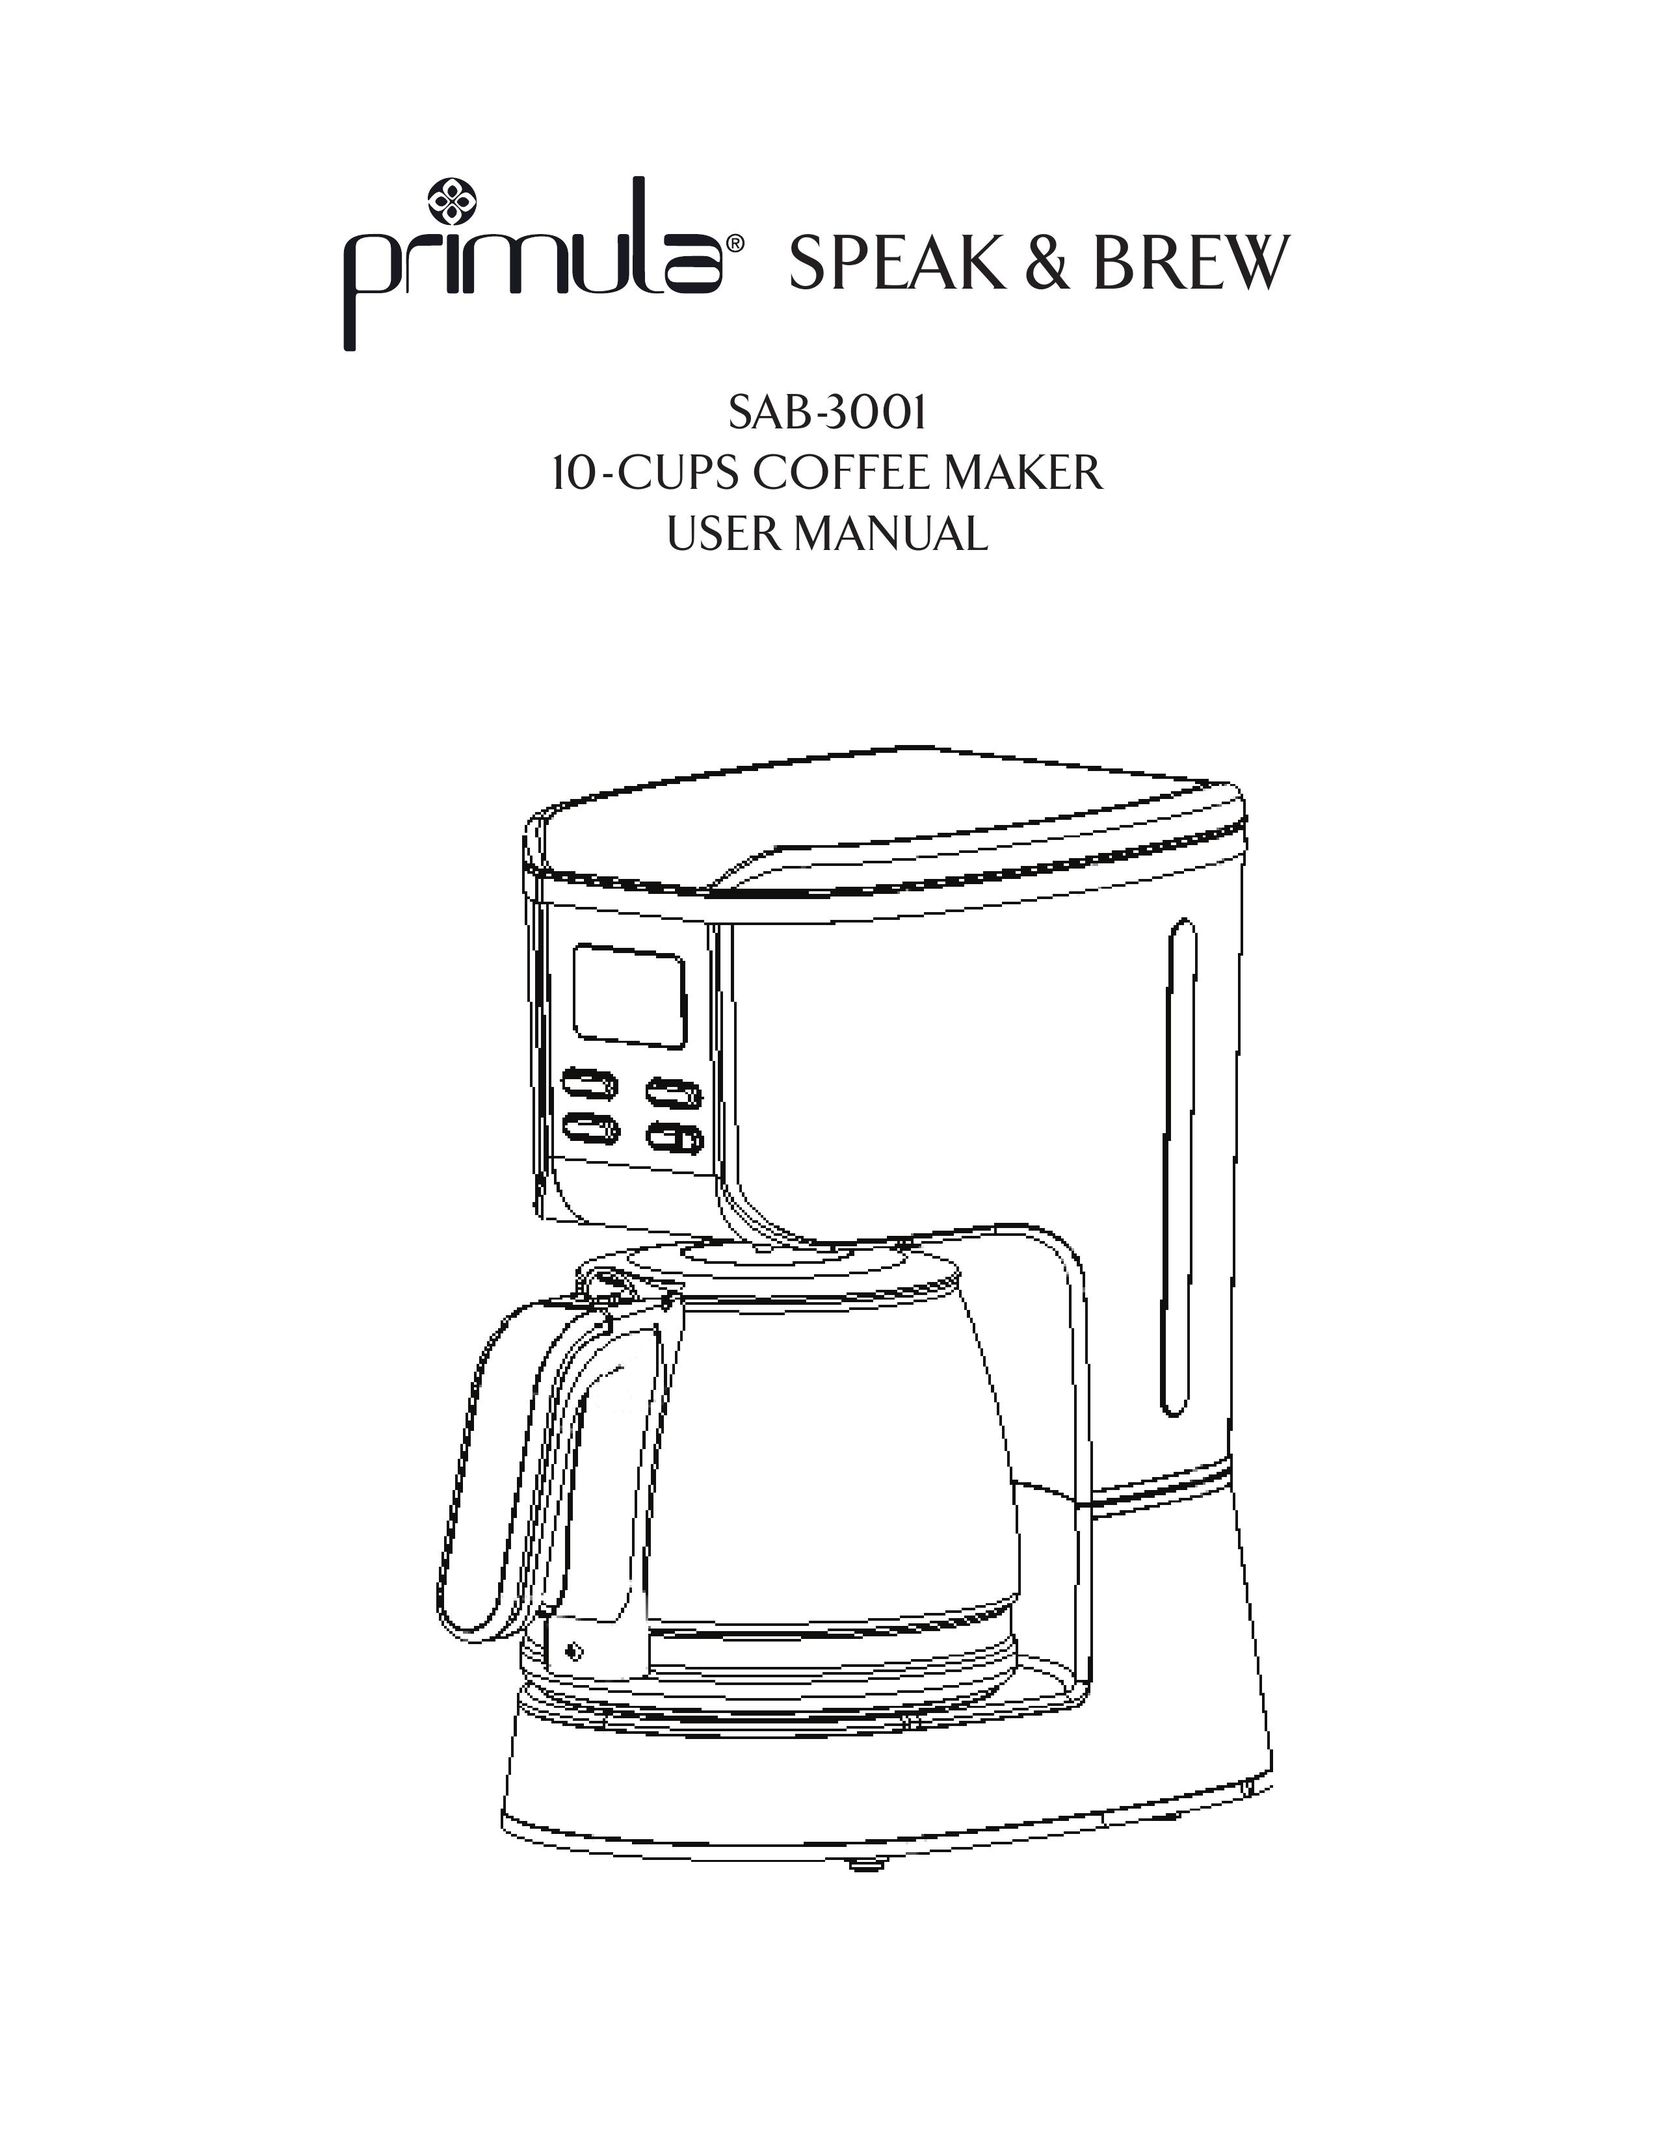 Epoca SAB-3001 Coffeemaker User Manual